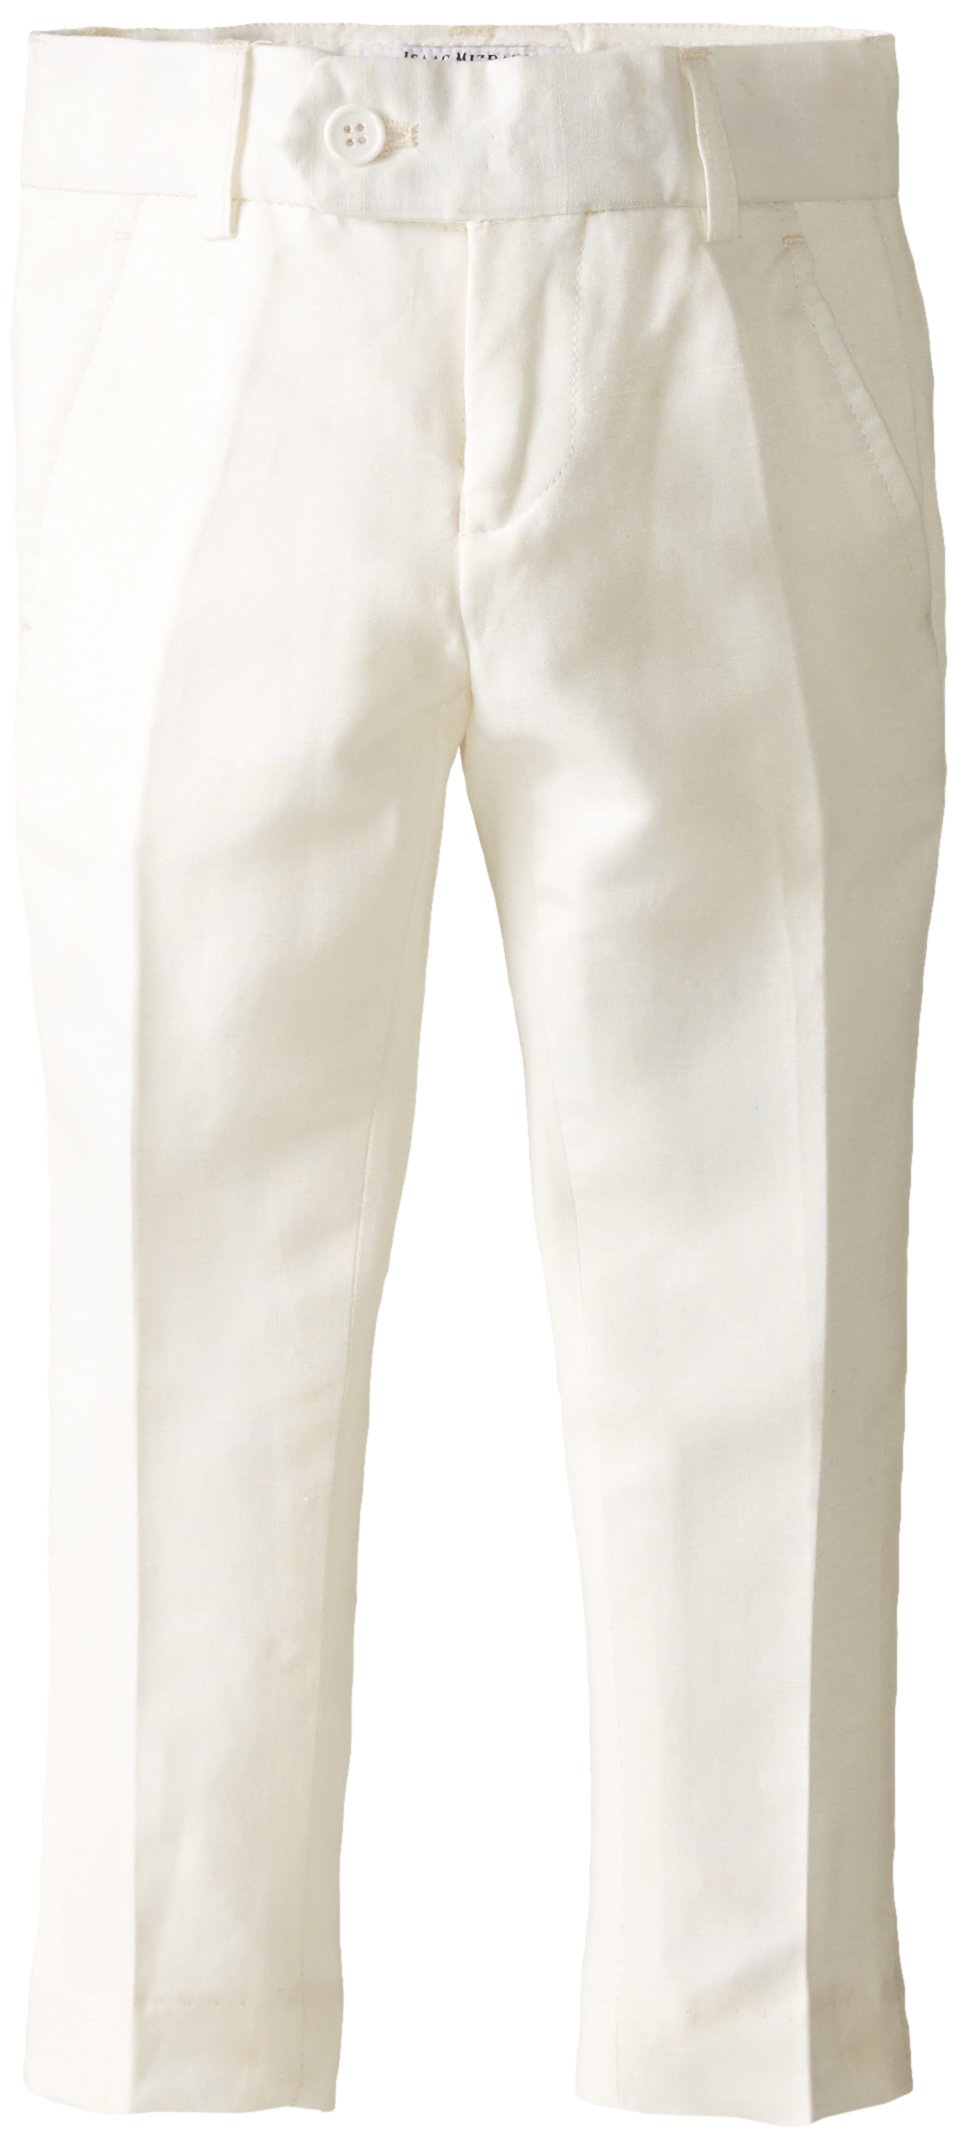 Isaac Mizrahi Little Boys' Solid Linen Pant